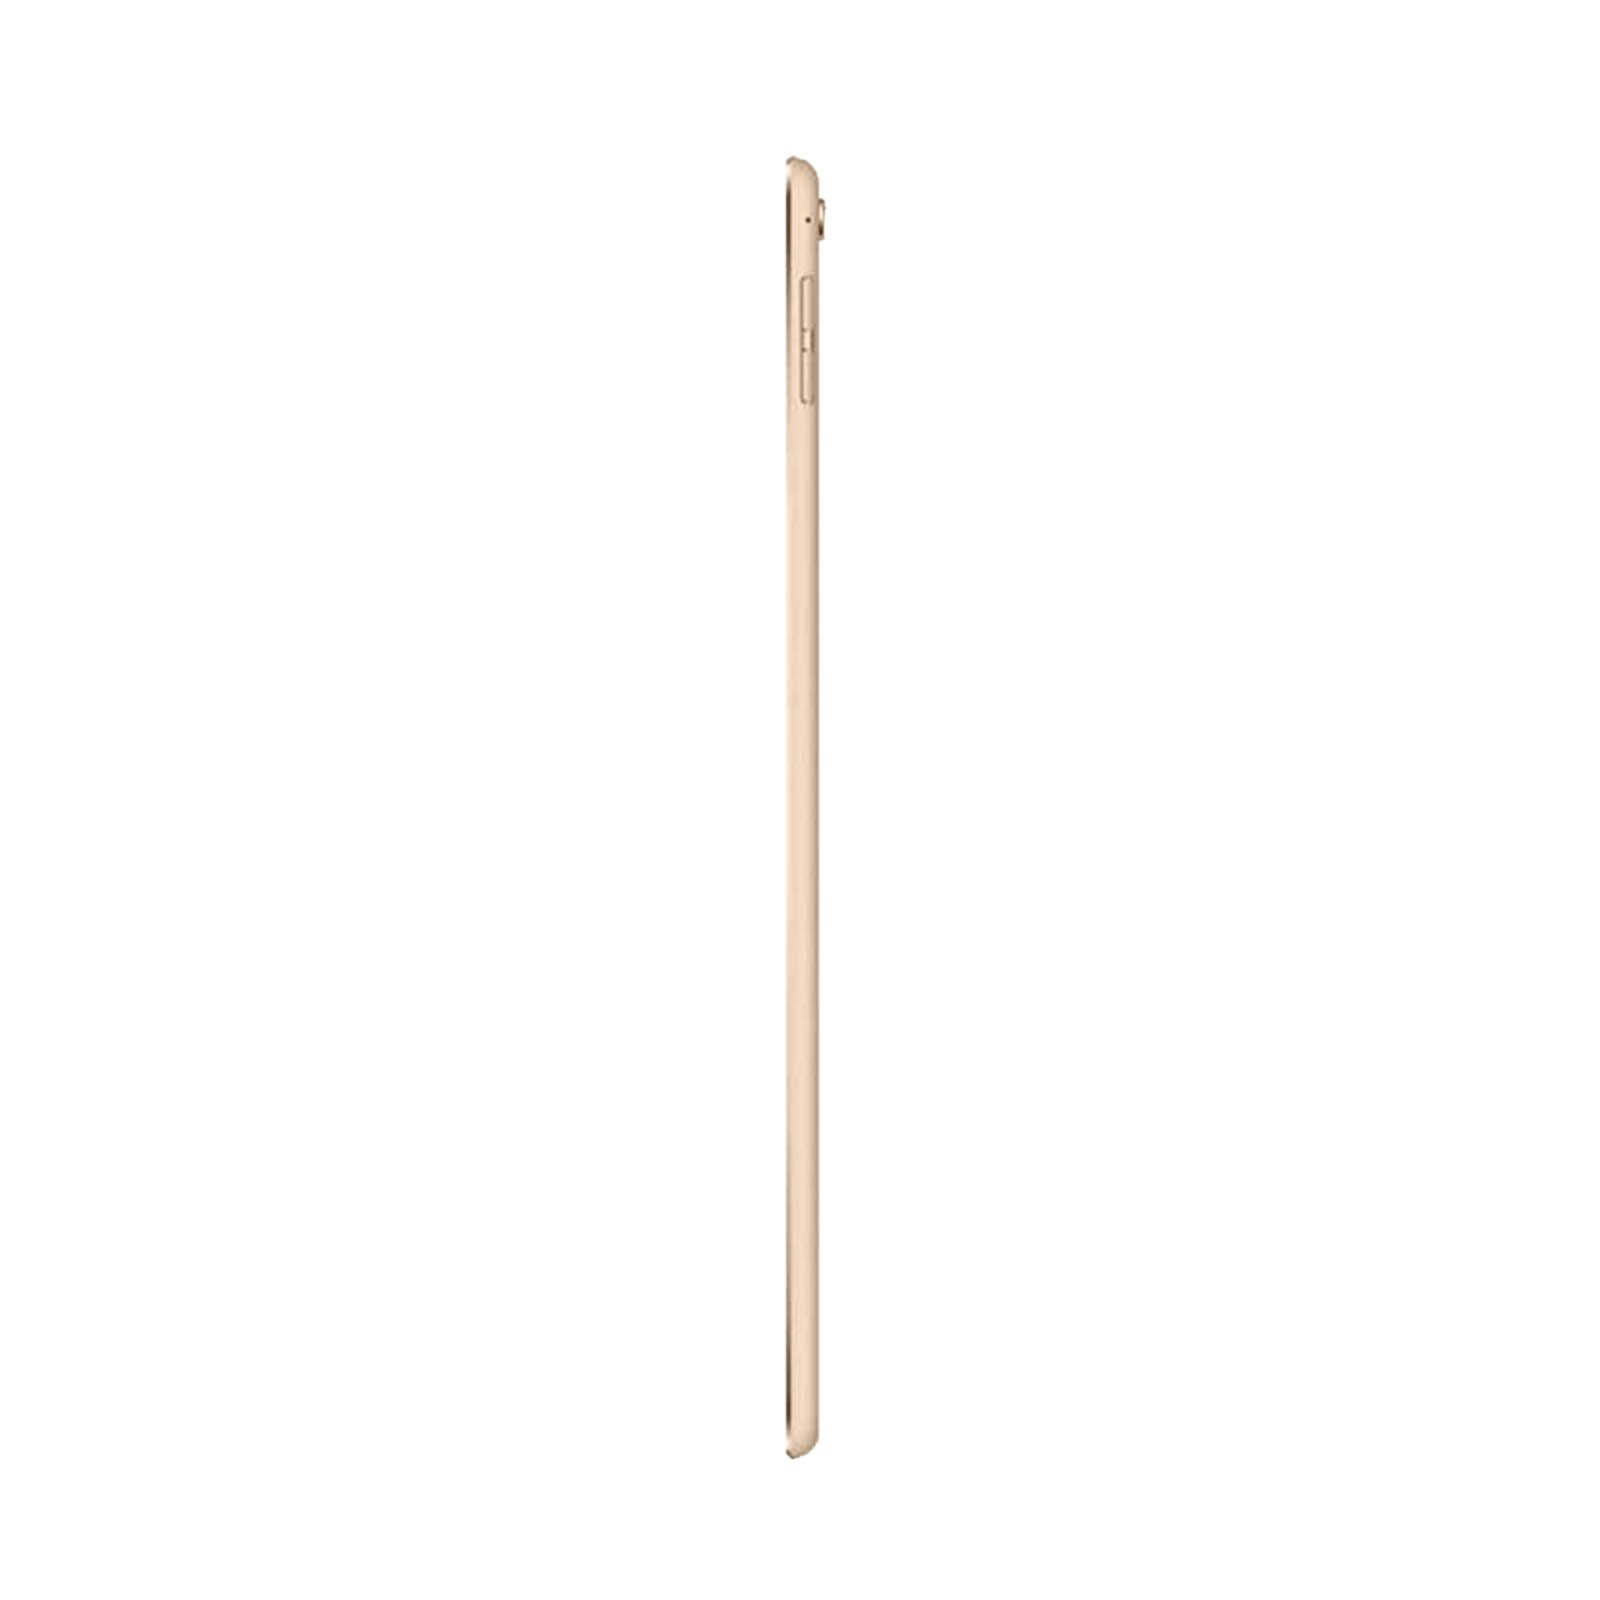 iPad Pro 9.7 Inch 128GB Gold Pristine - Unlocked